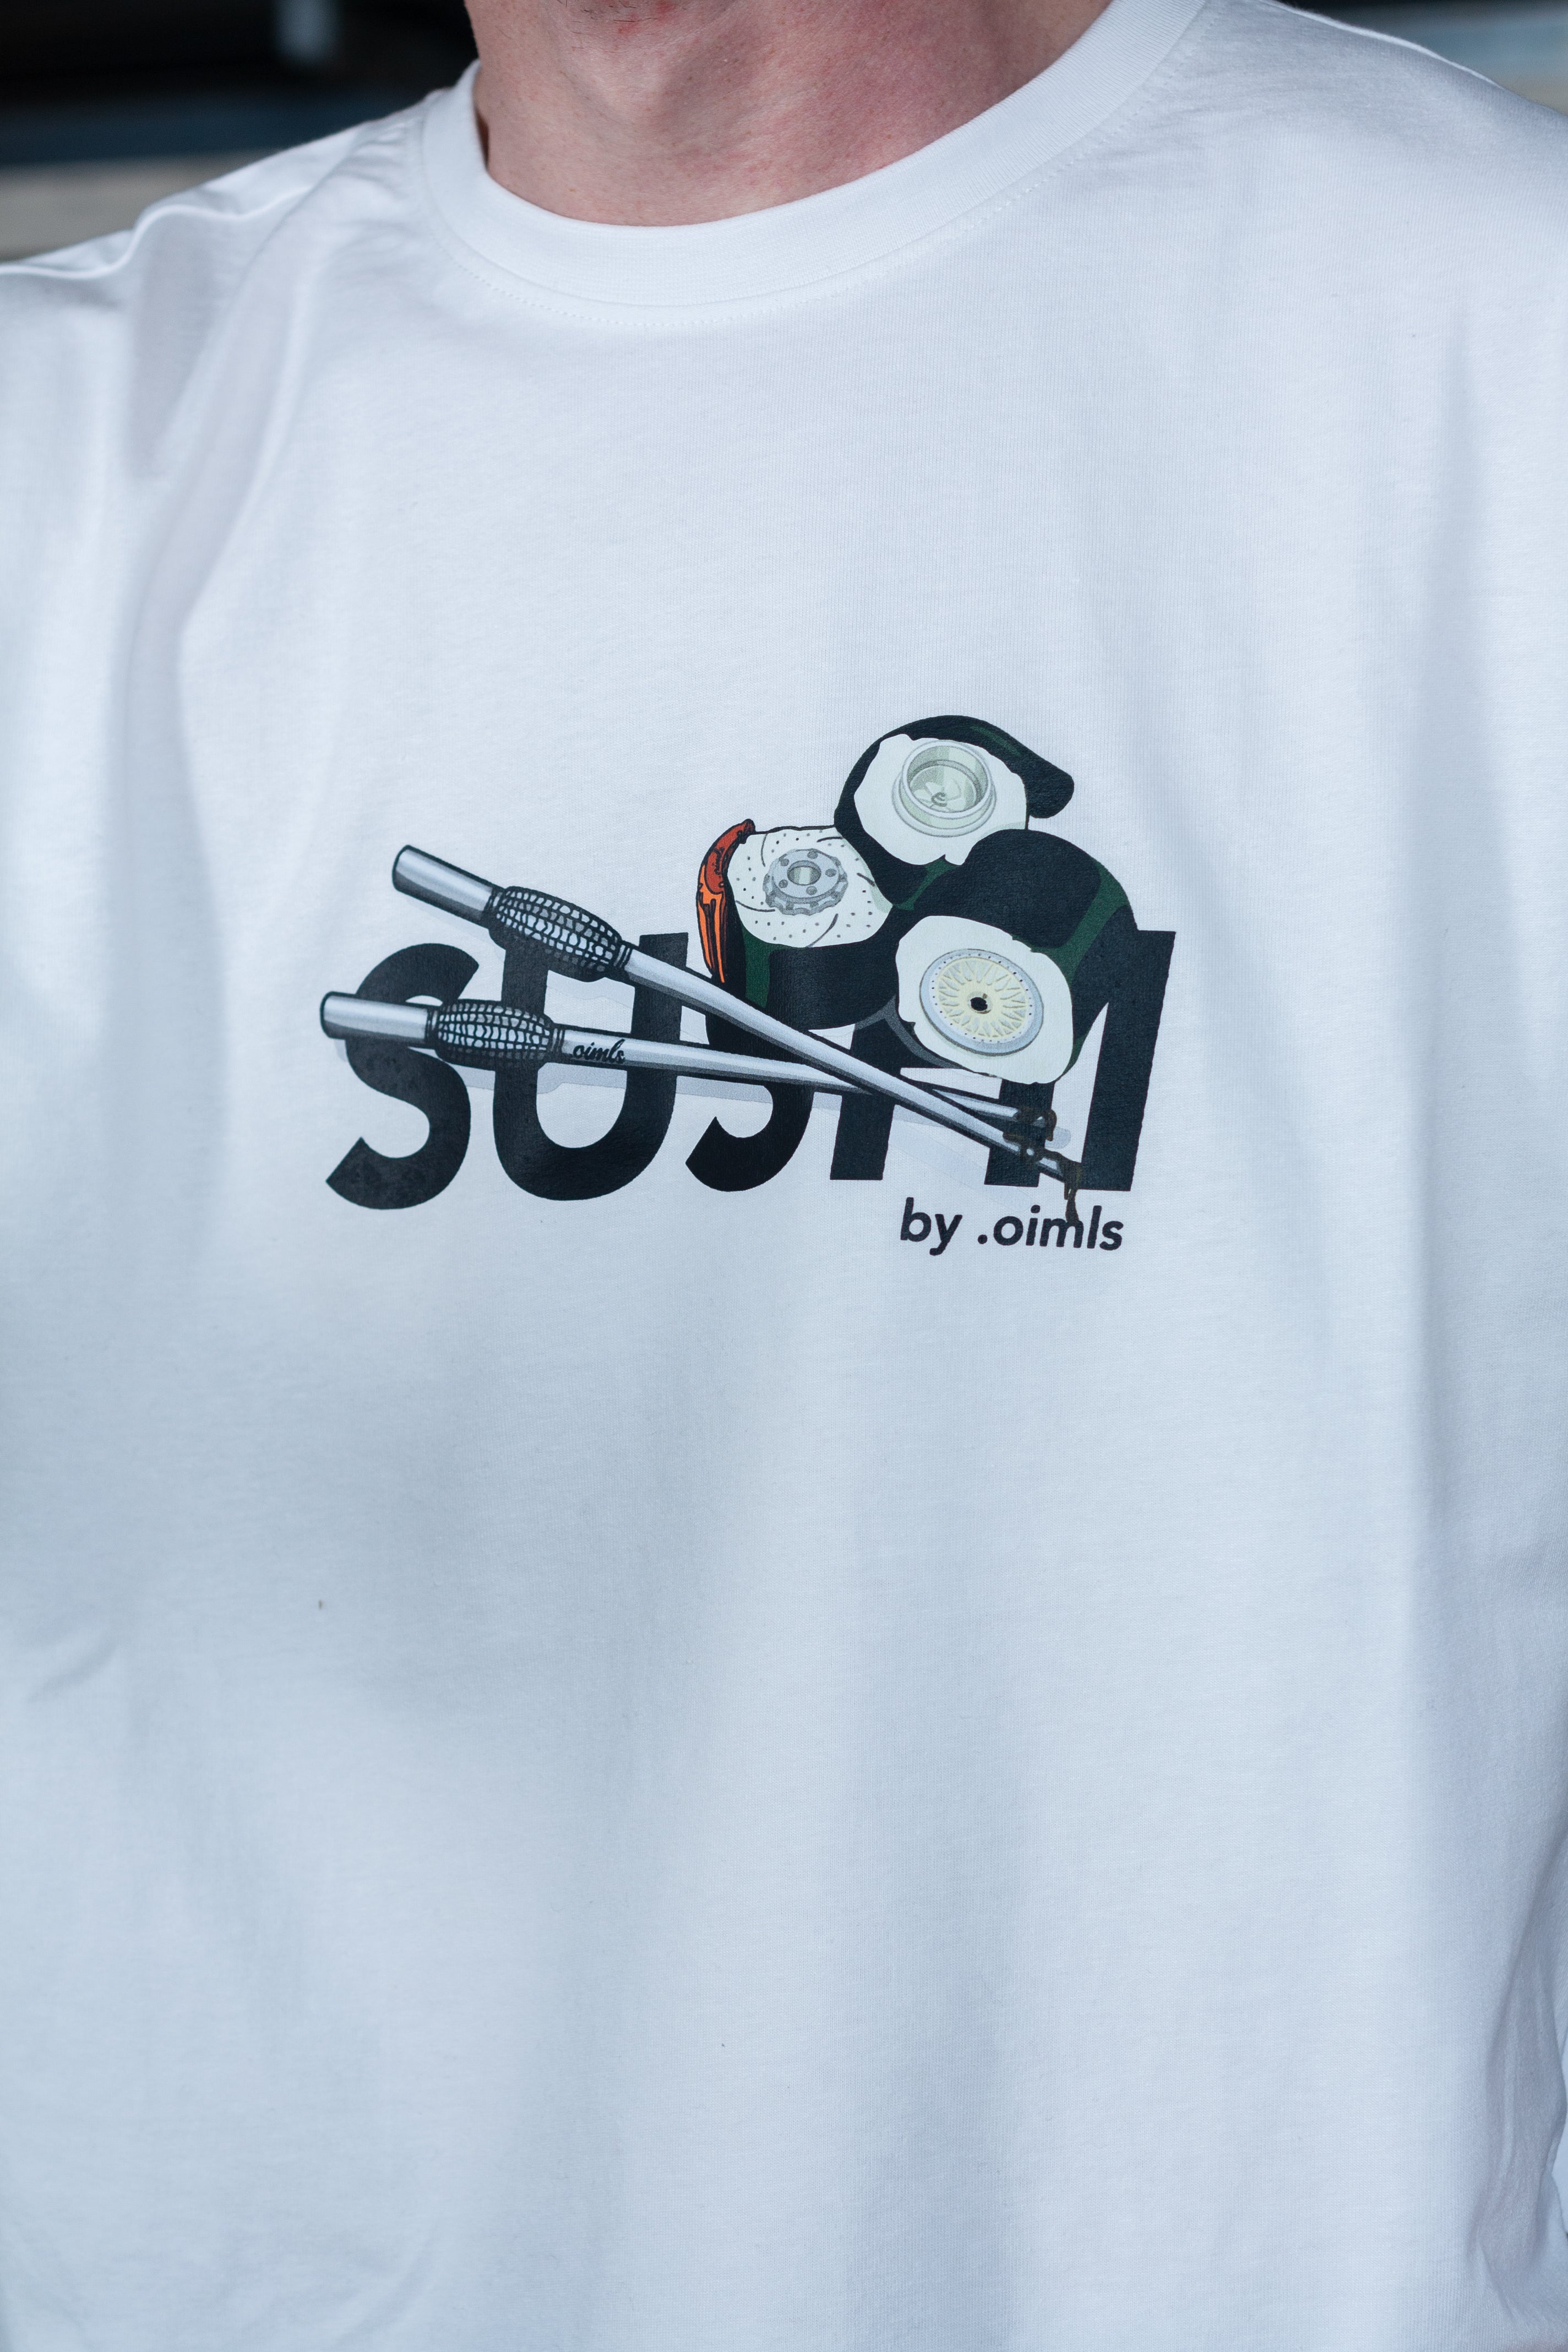 .oimls - sushi shirt white